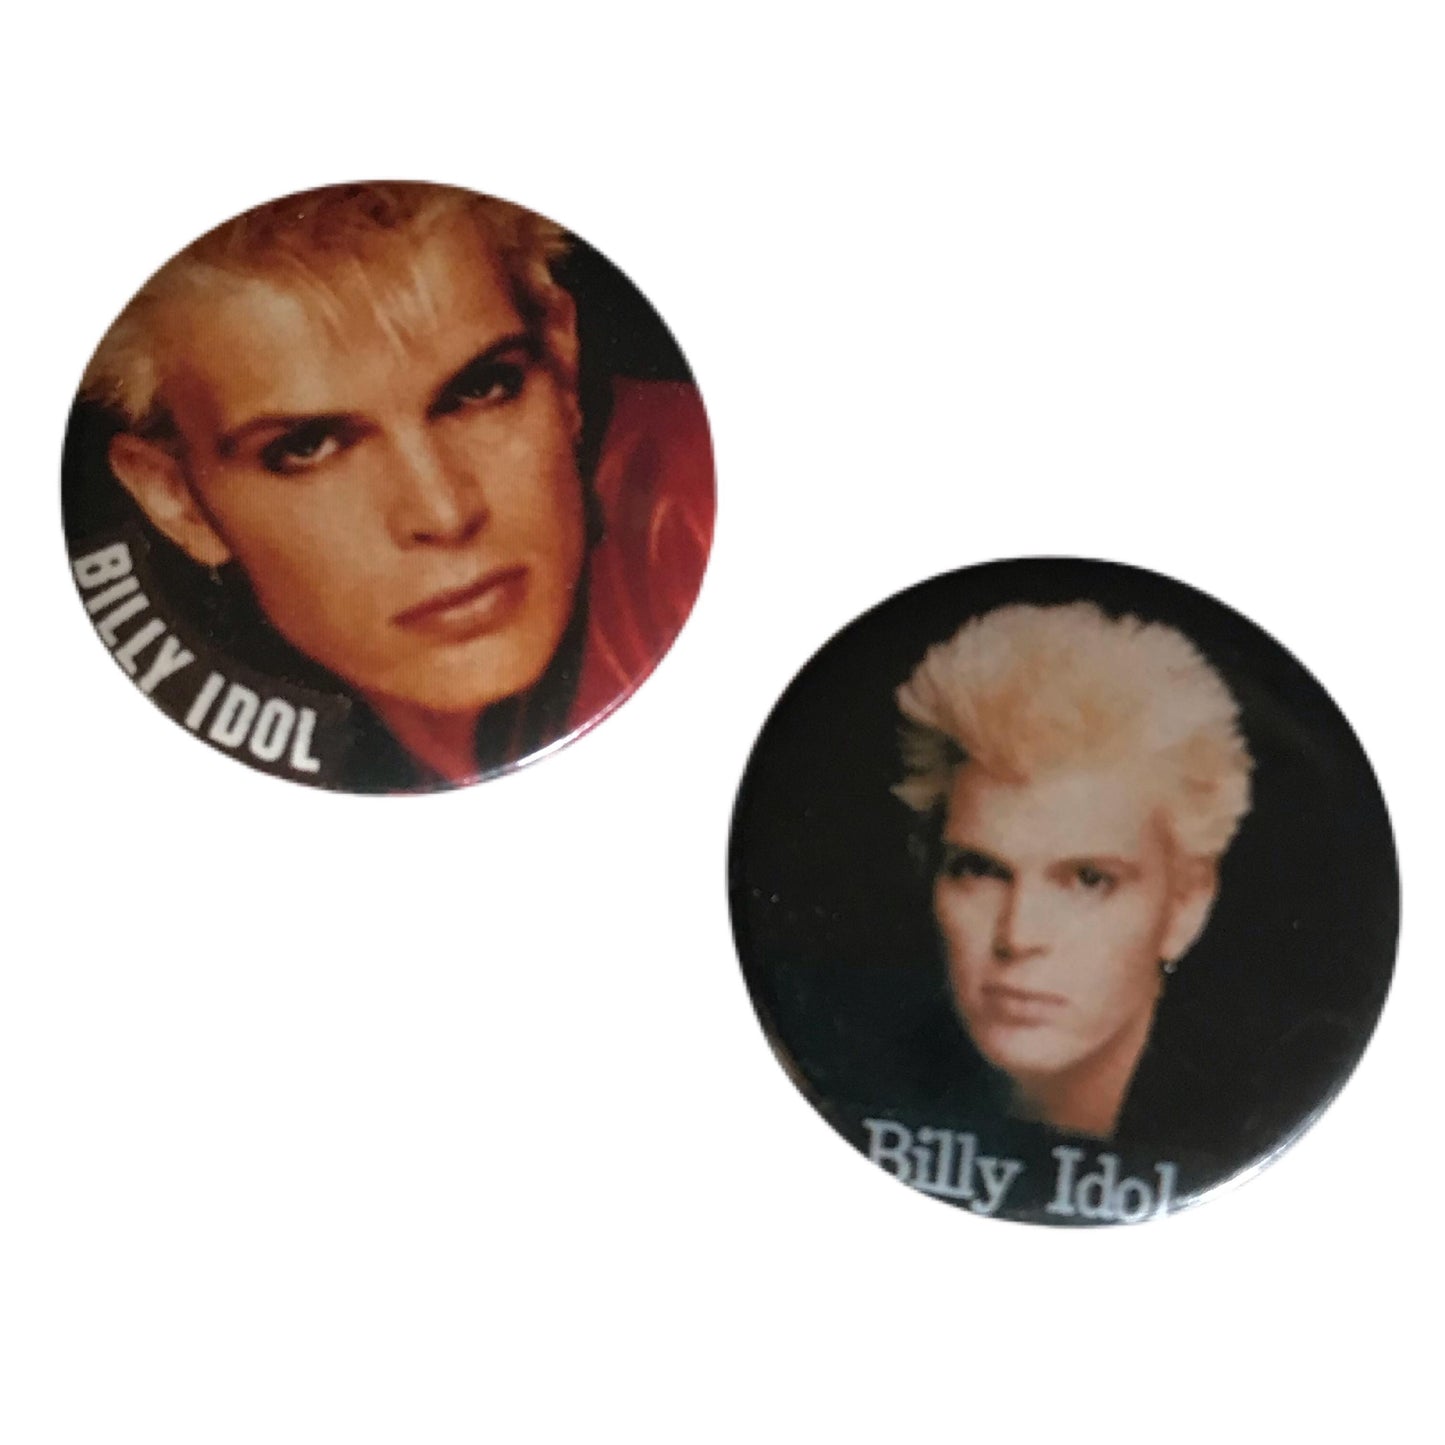 Billy Idol Pin Button Collection circa 1980s